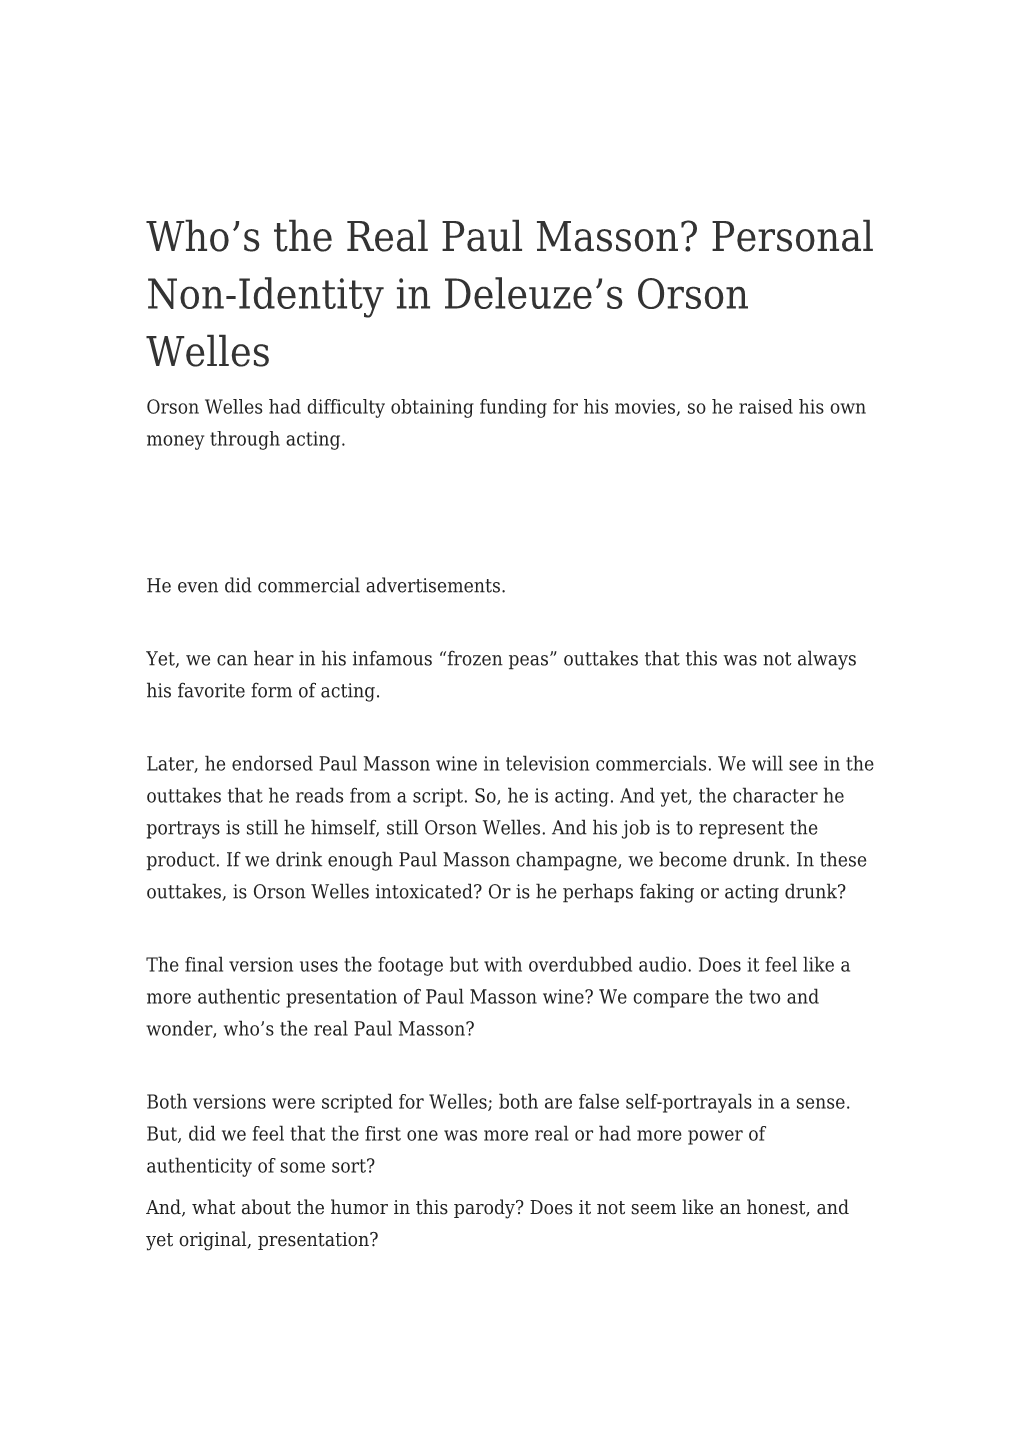 Who's the Real Paul Masson? Personal Non-Identity in Deleuze's